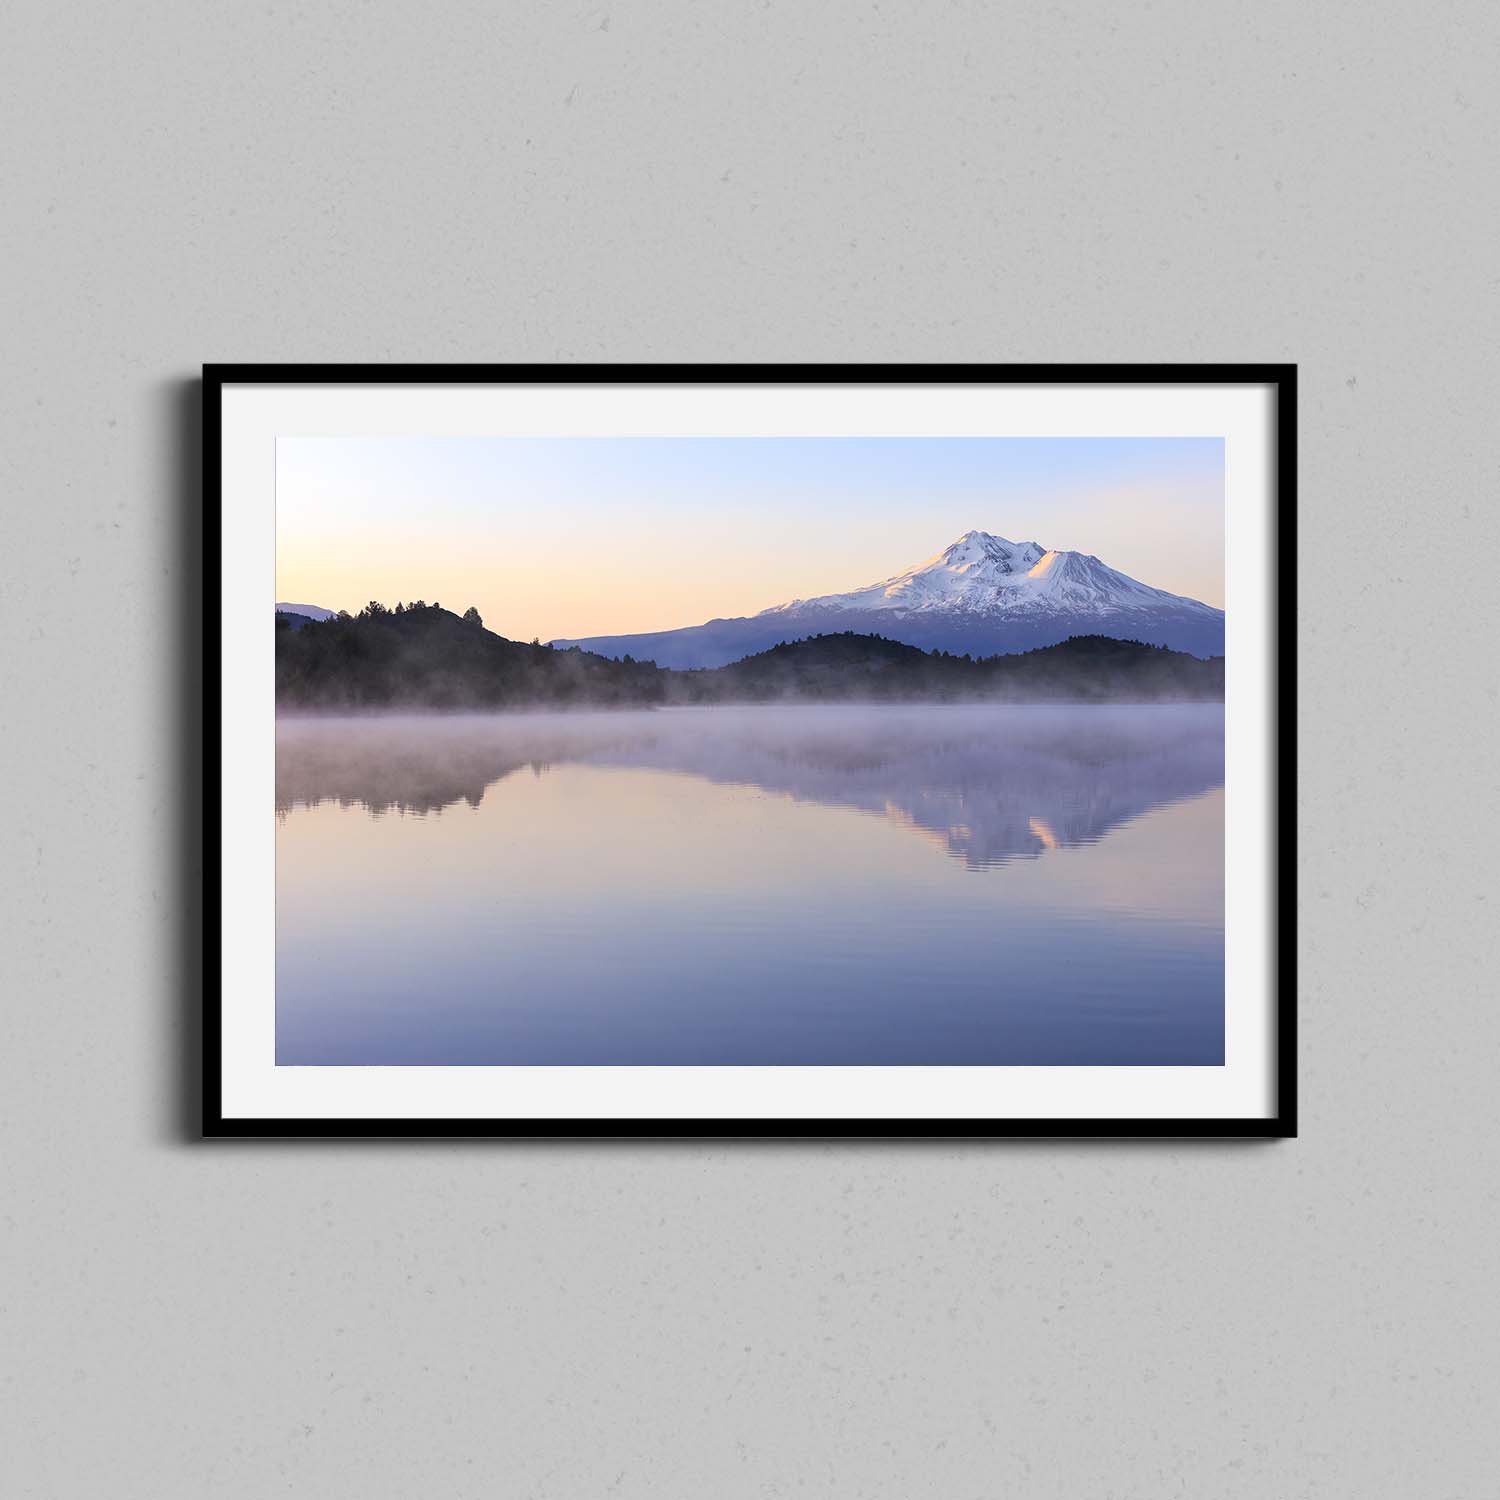 Mount Shasta Reflection Print